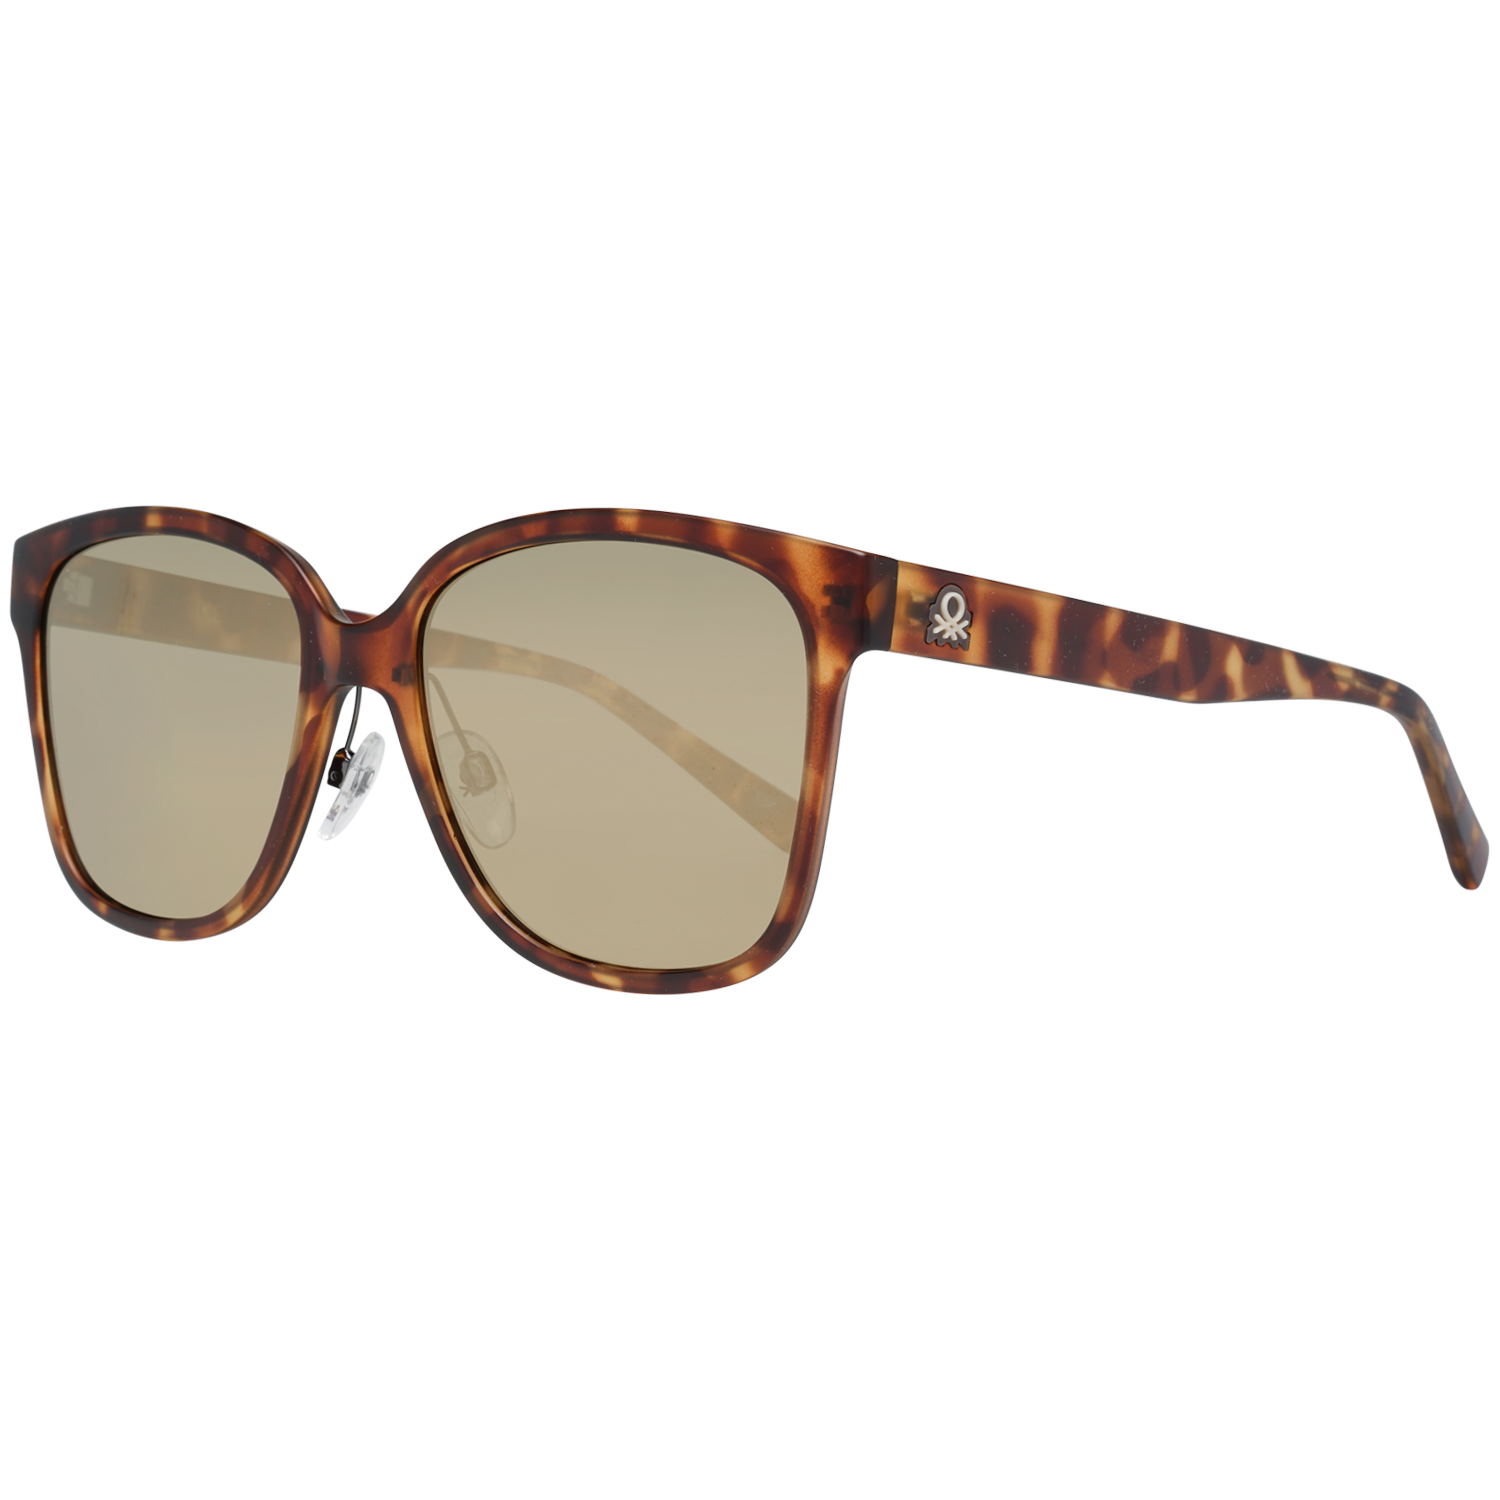 Benetton Sunglasses BE5007 112 56 Brown